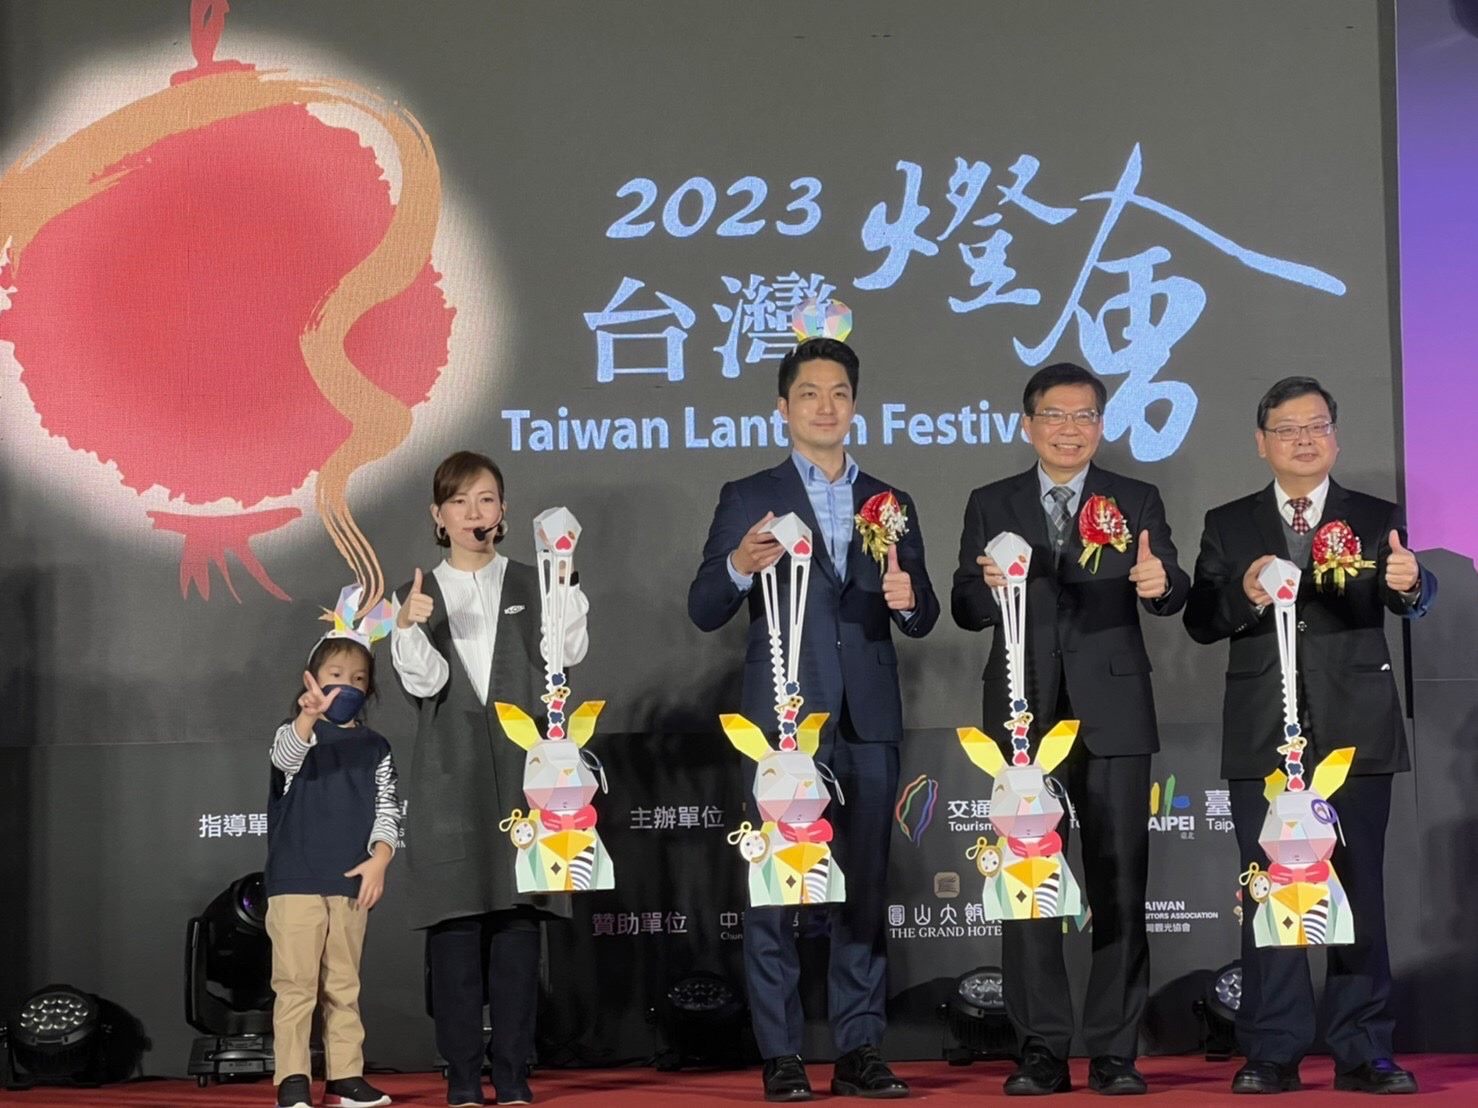 Mayor and dignitaries at the Taiwan Lantern Festival press conference